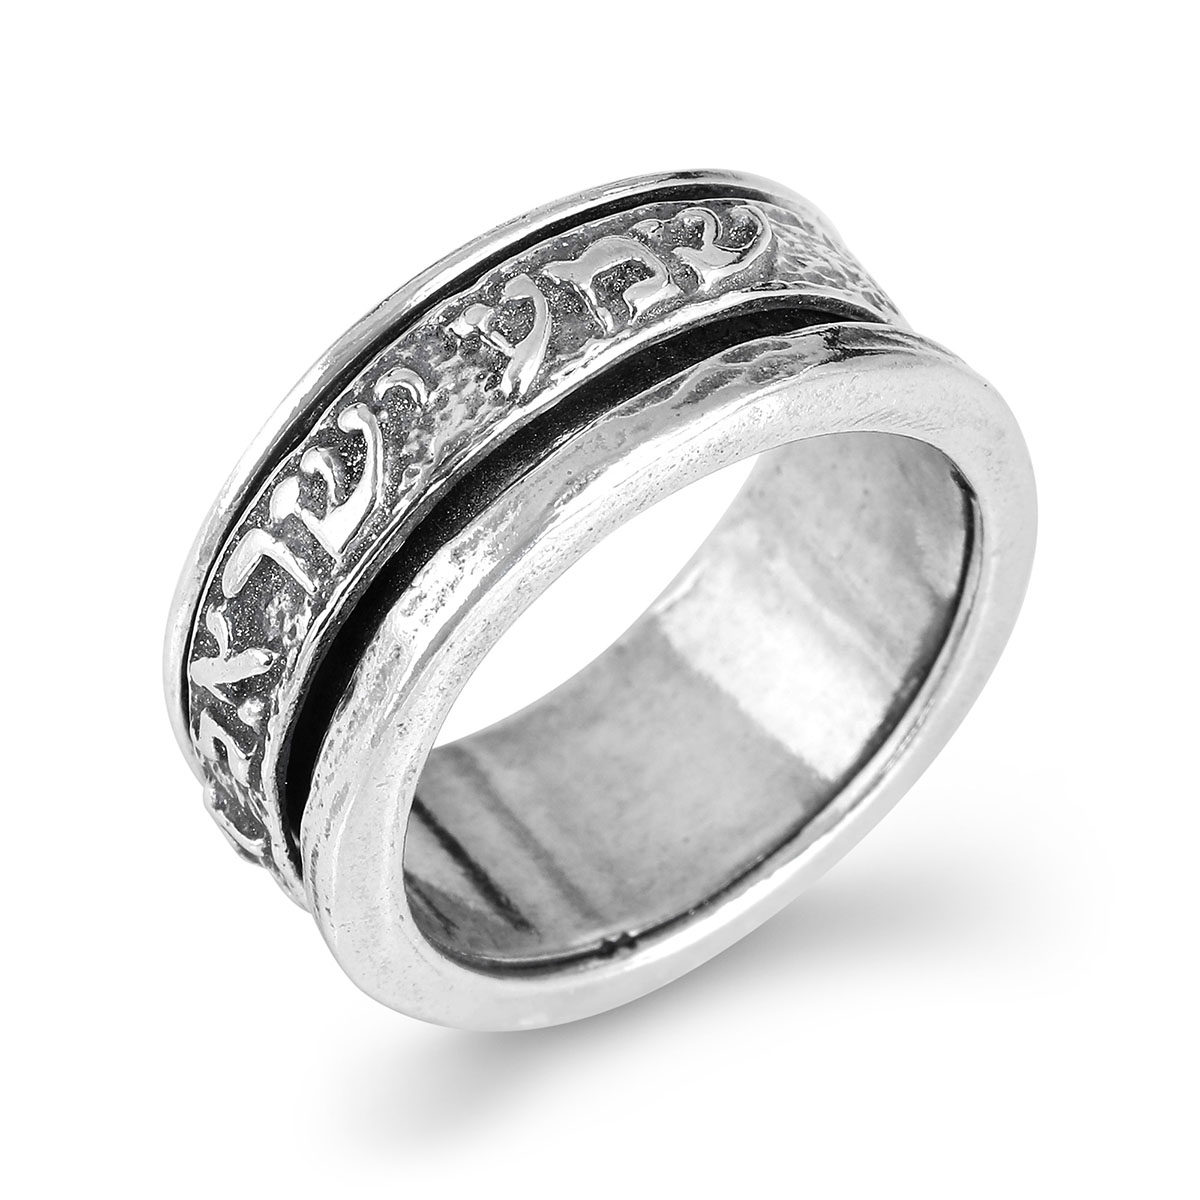 Stylish Sterling Silver Shema Yisrael Ring (Deuteronomy 6:4) - 1